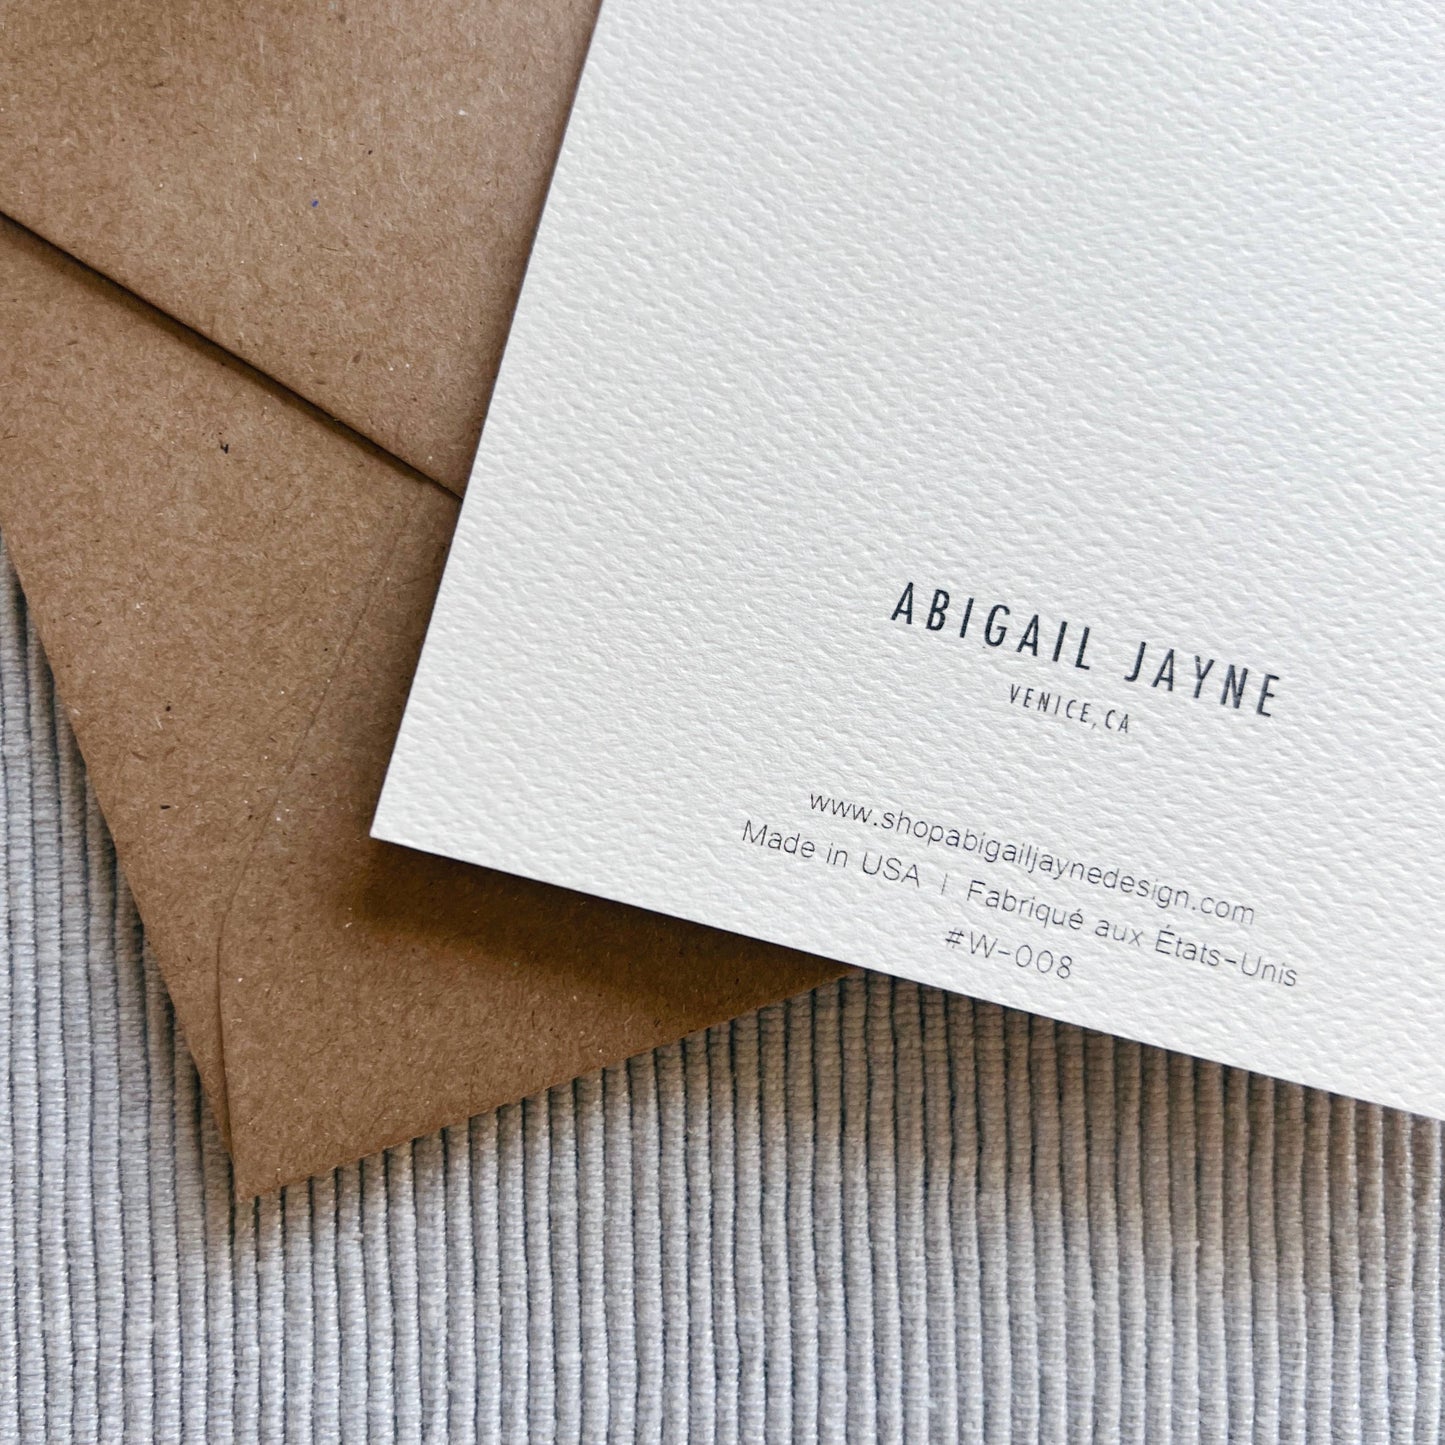 Abigail Jayne Design - Happy Birthday Partner Greeting Card